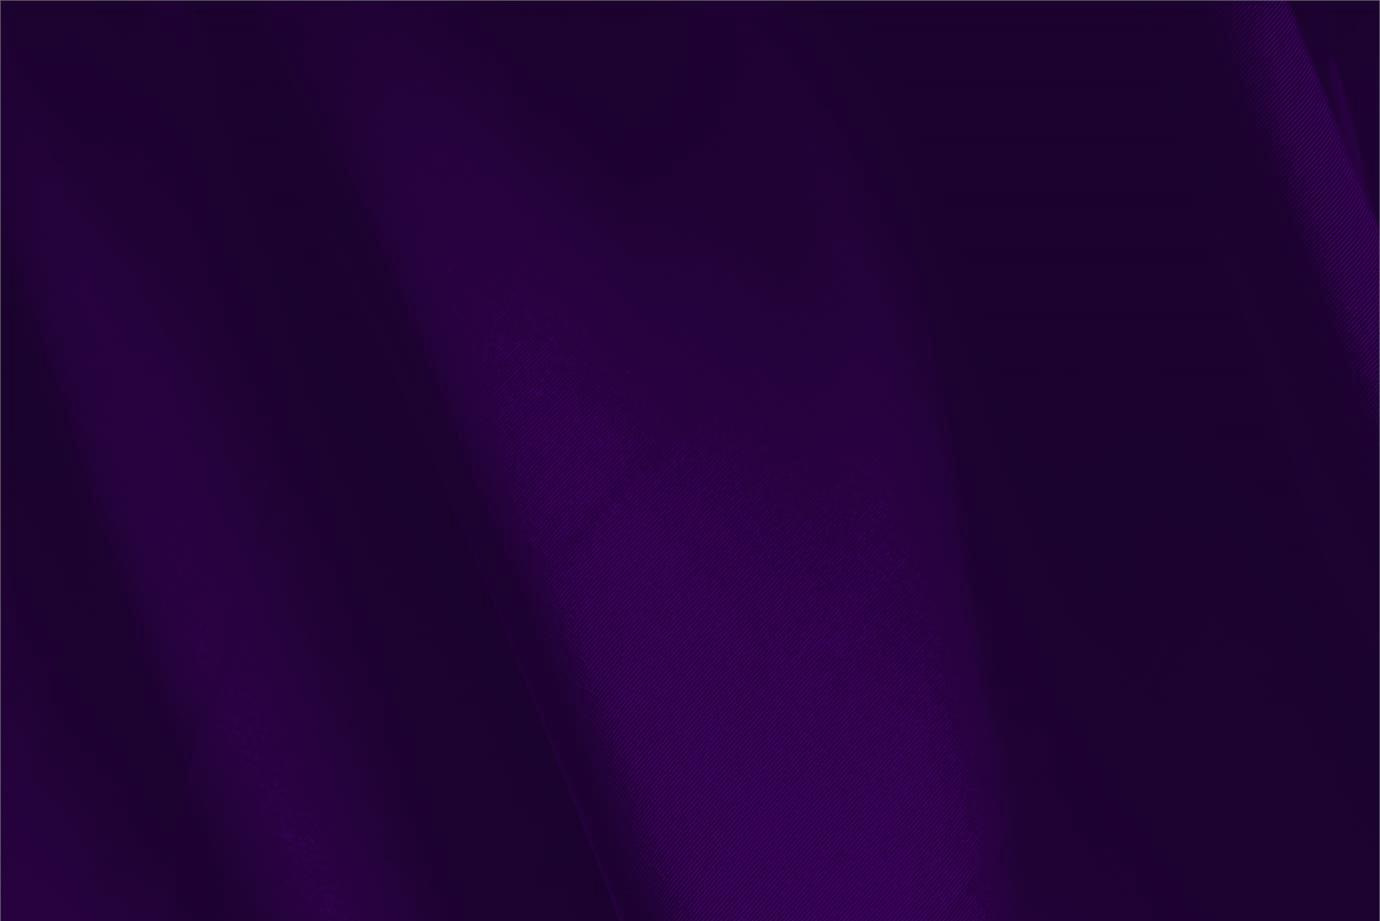 Tissu Couture Faille Violet indigo en Soie UN000131